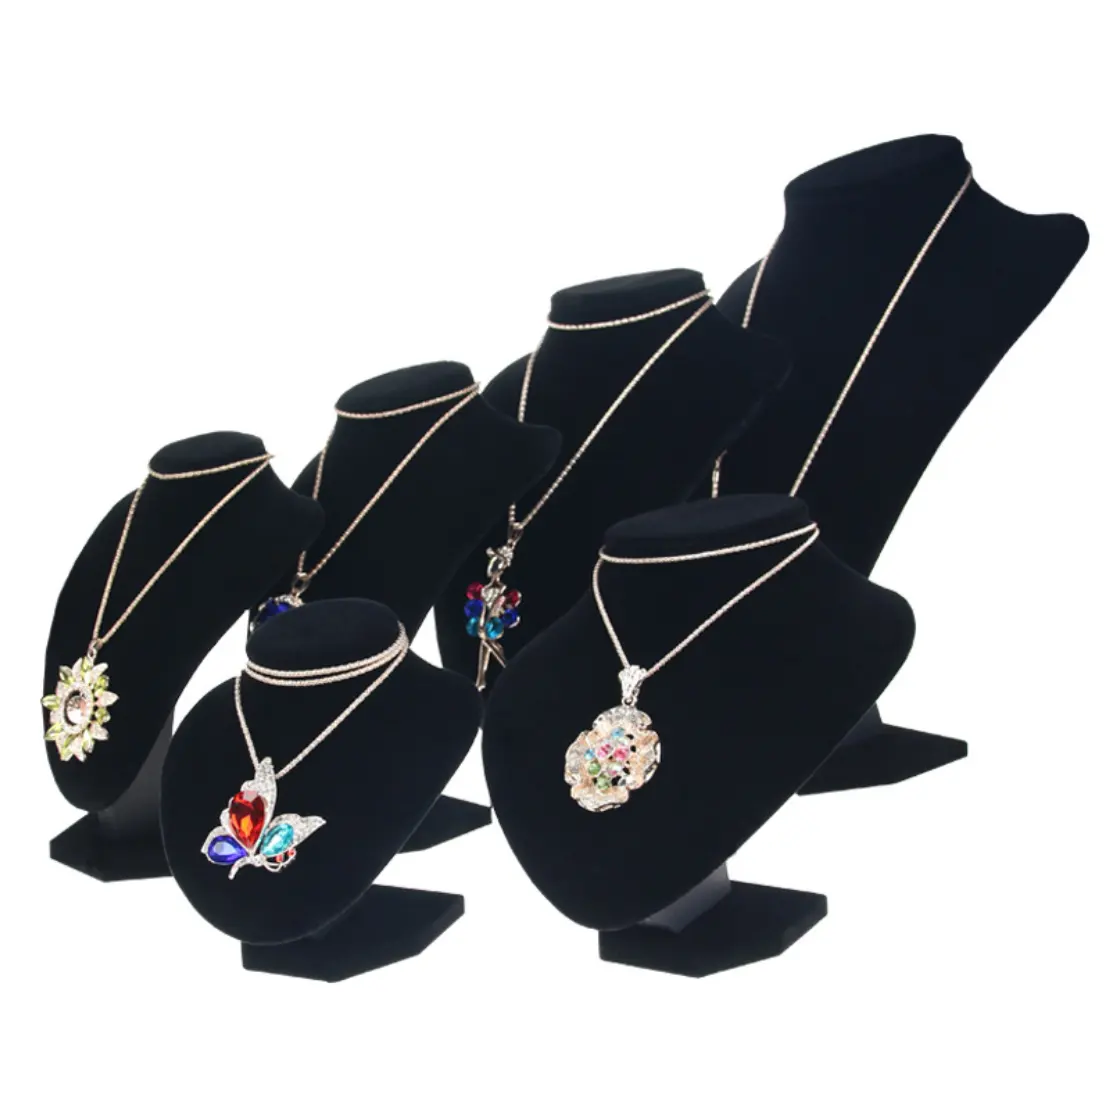 2020 vente chaude noir velours collier bijoux affichage buste support bijoux affichage cou stands